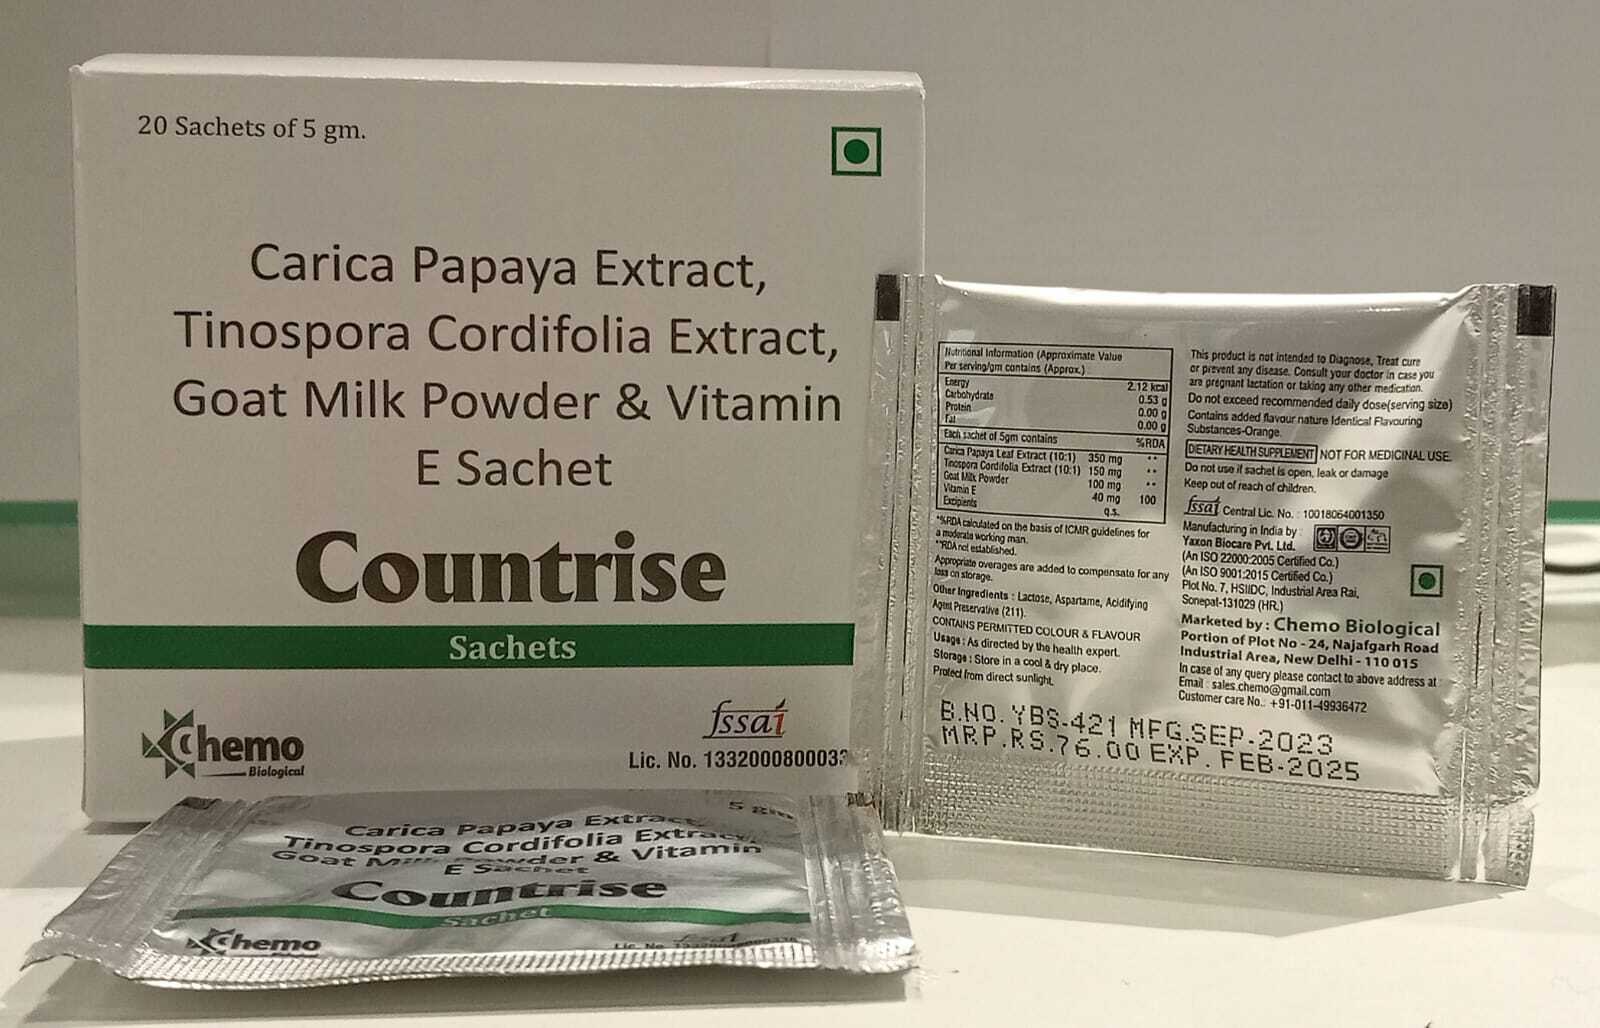 Carica Papaya Leaf Extract 350mg + Tinospora Cordifolia Extract 150mg + Goat Milk Powder 100mg + Vitamin E 40mg